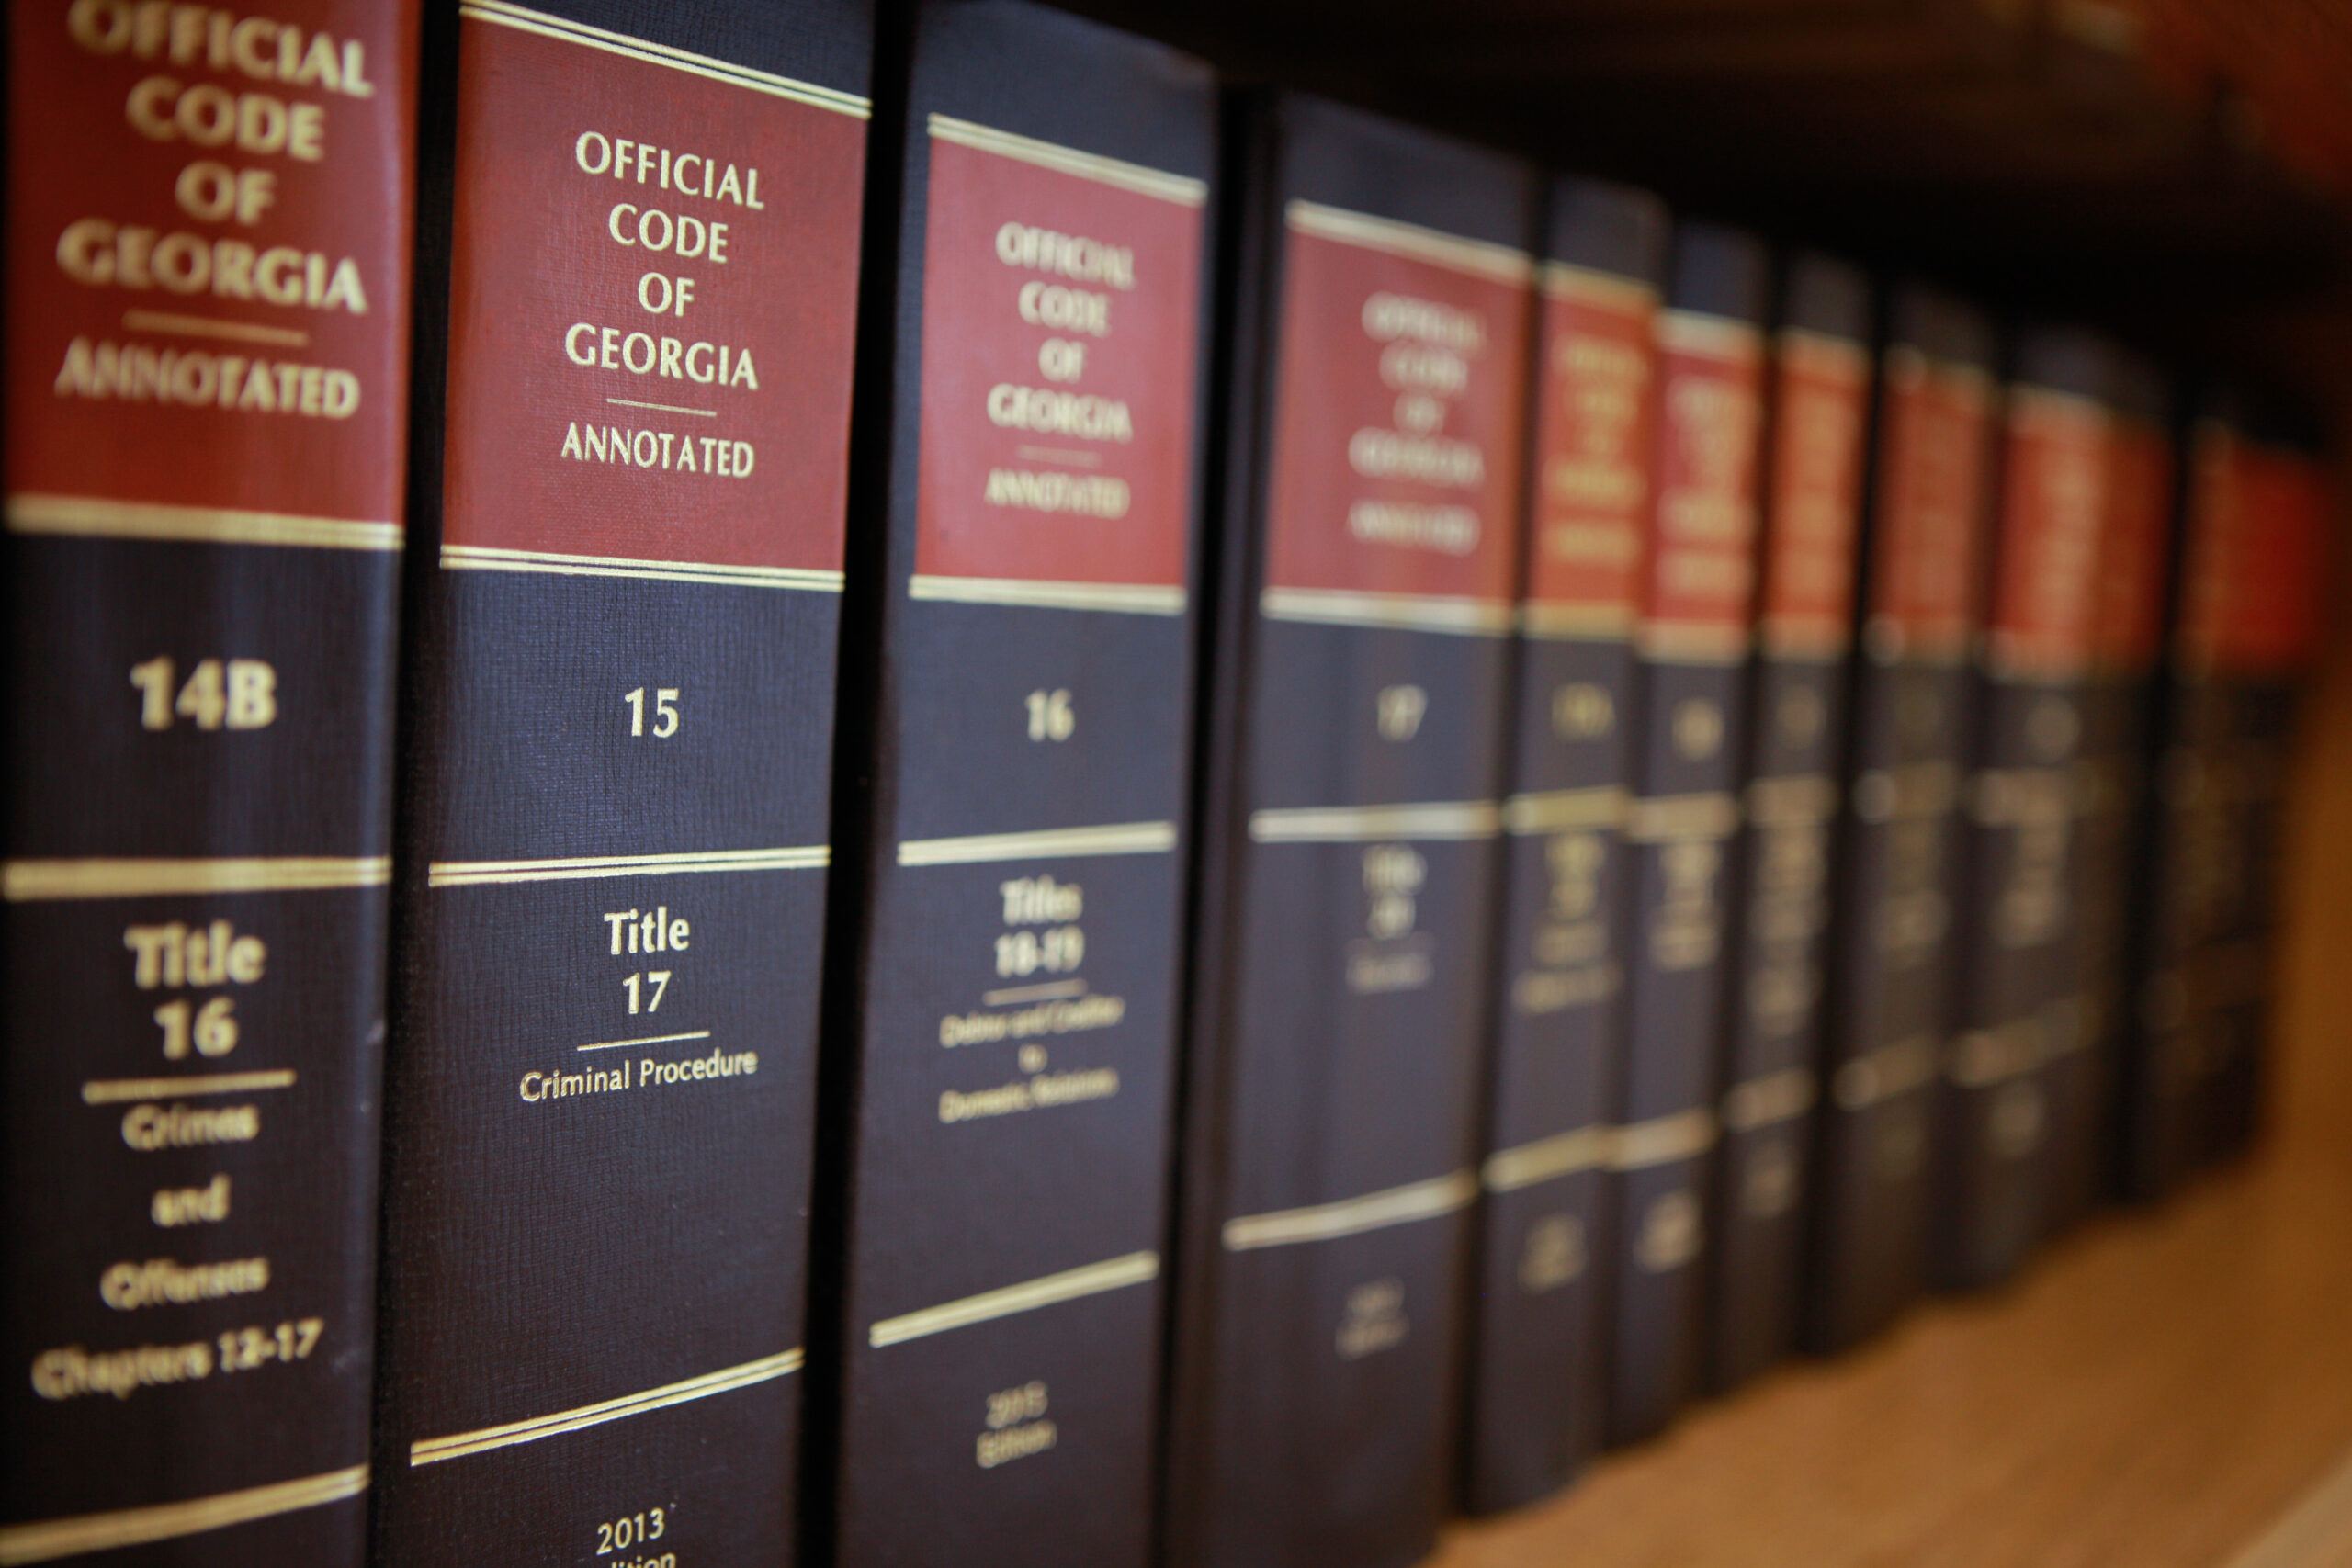 Georgia law books